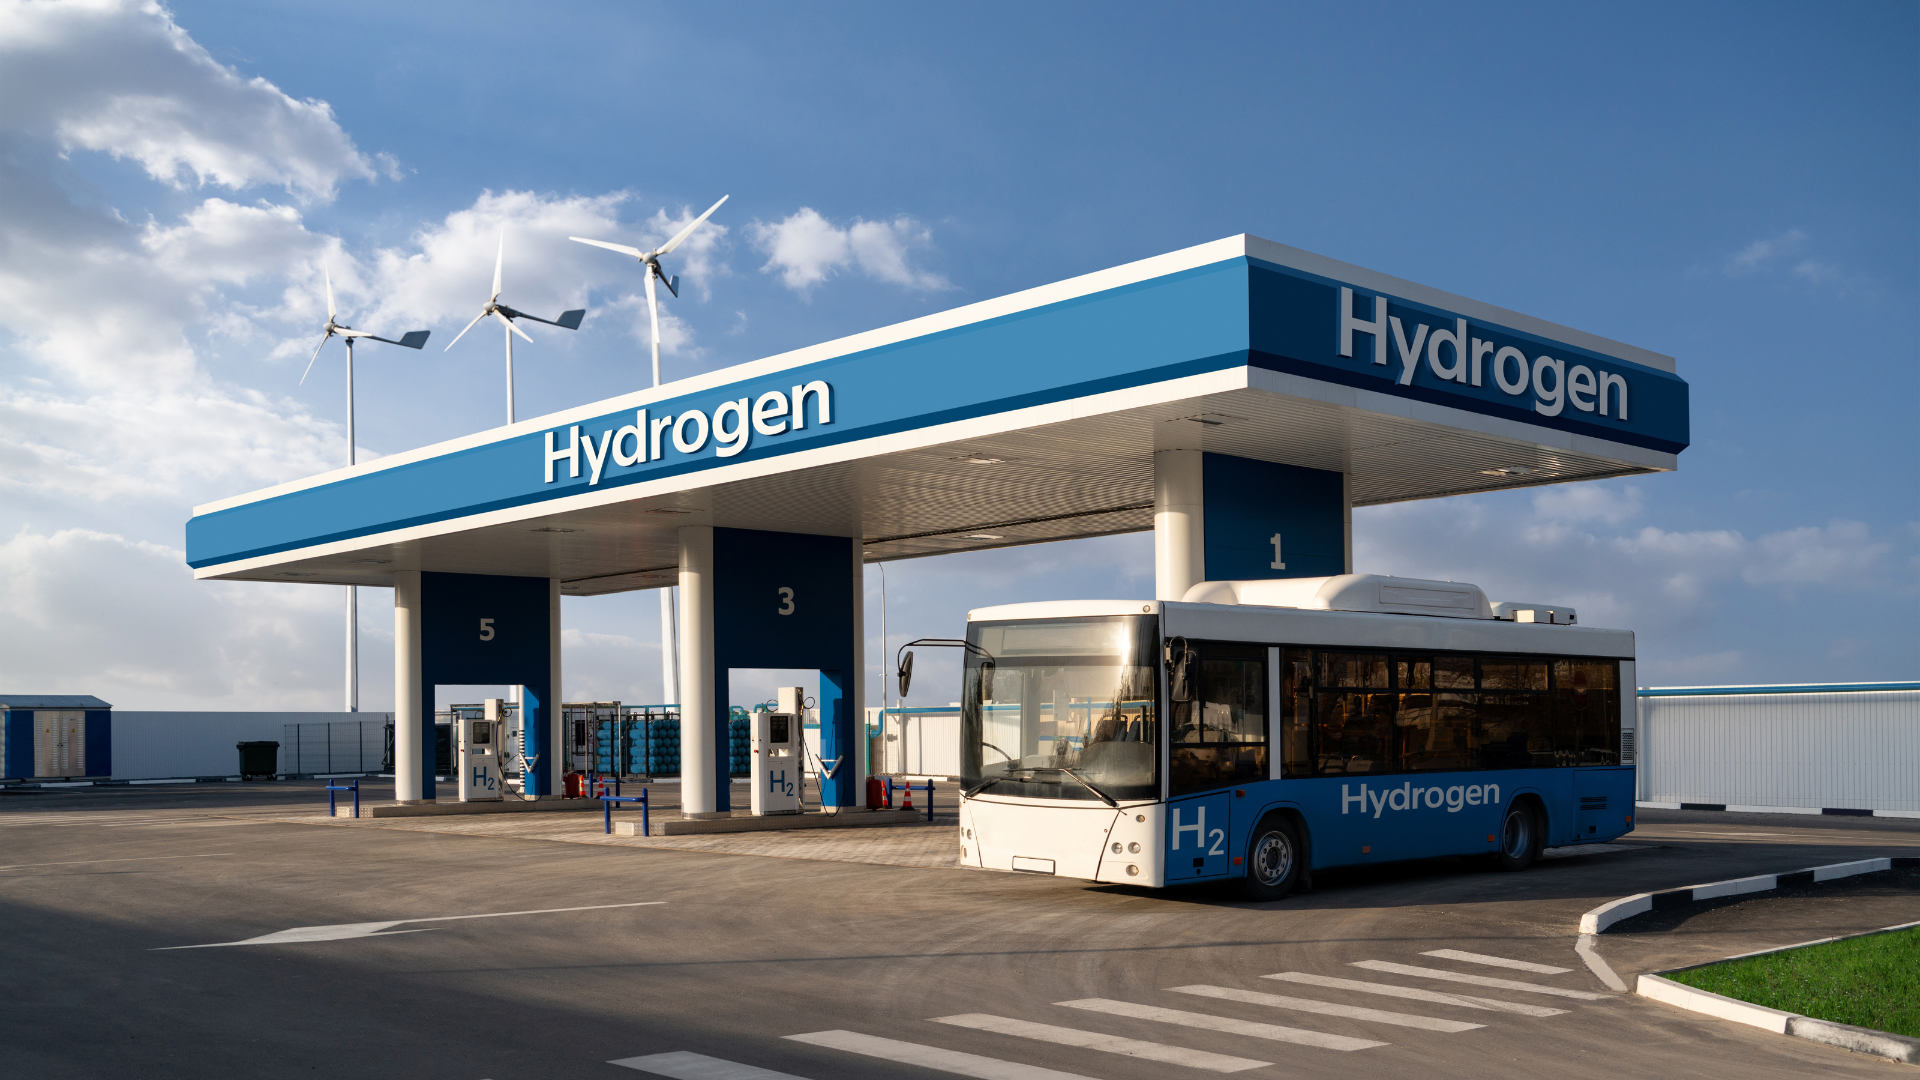 Hydrogen fueling for zero-emission buses